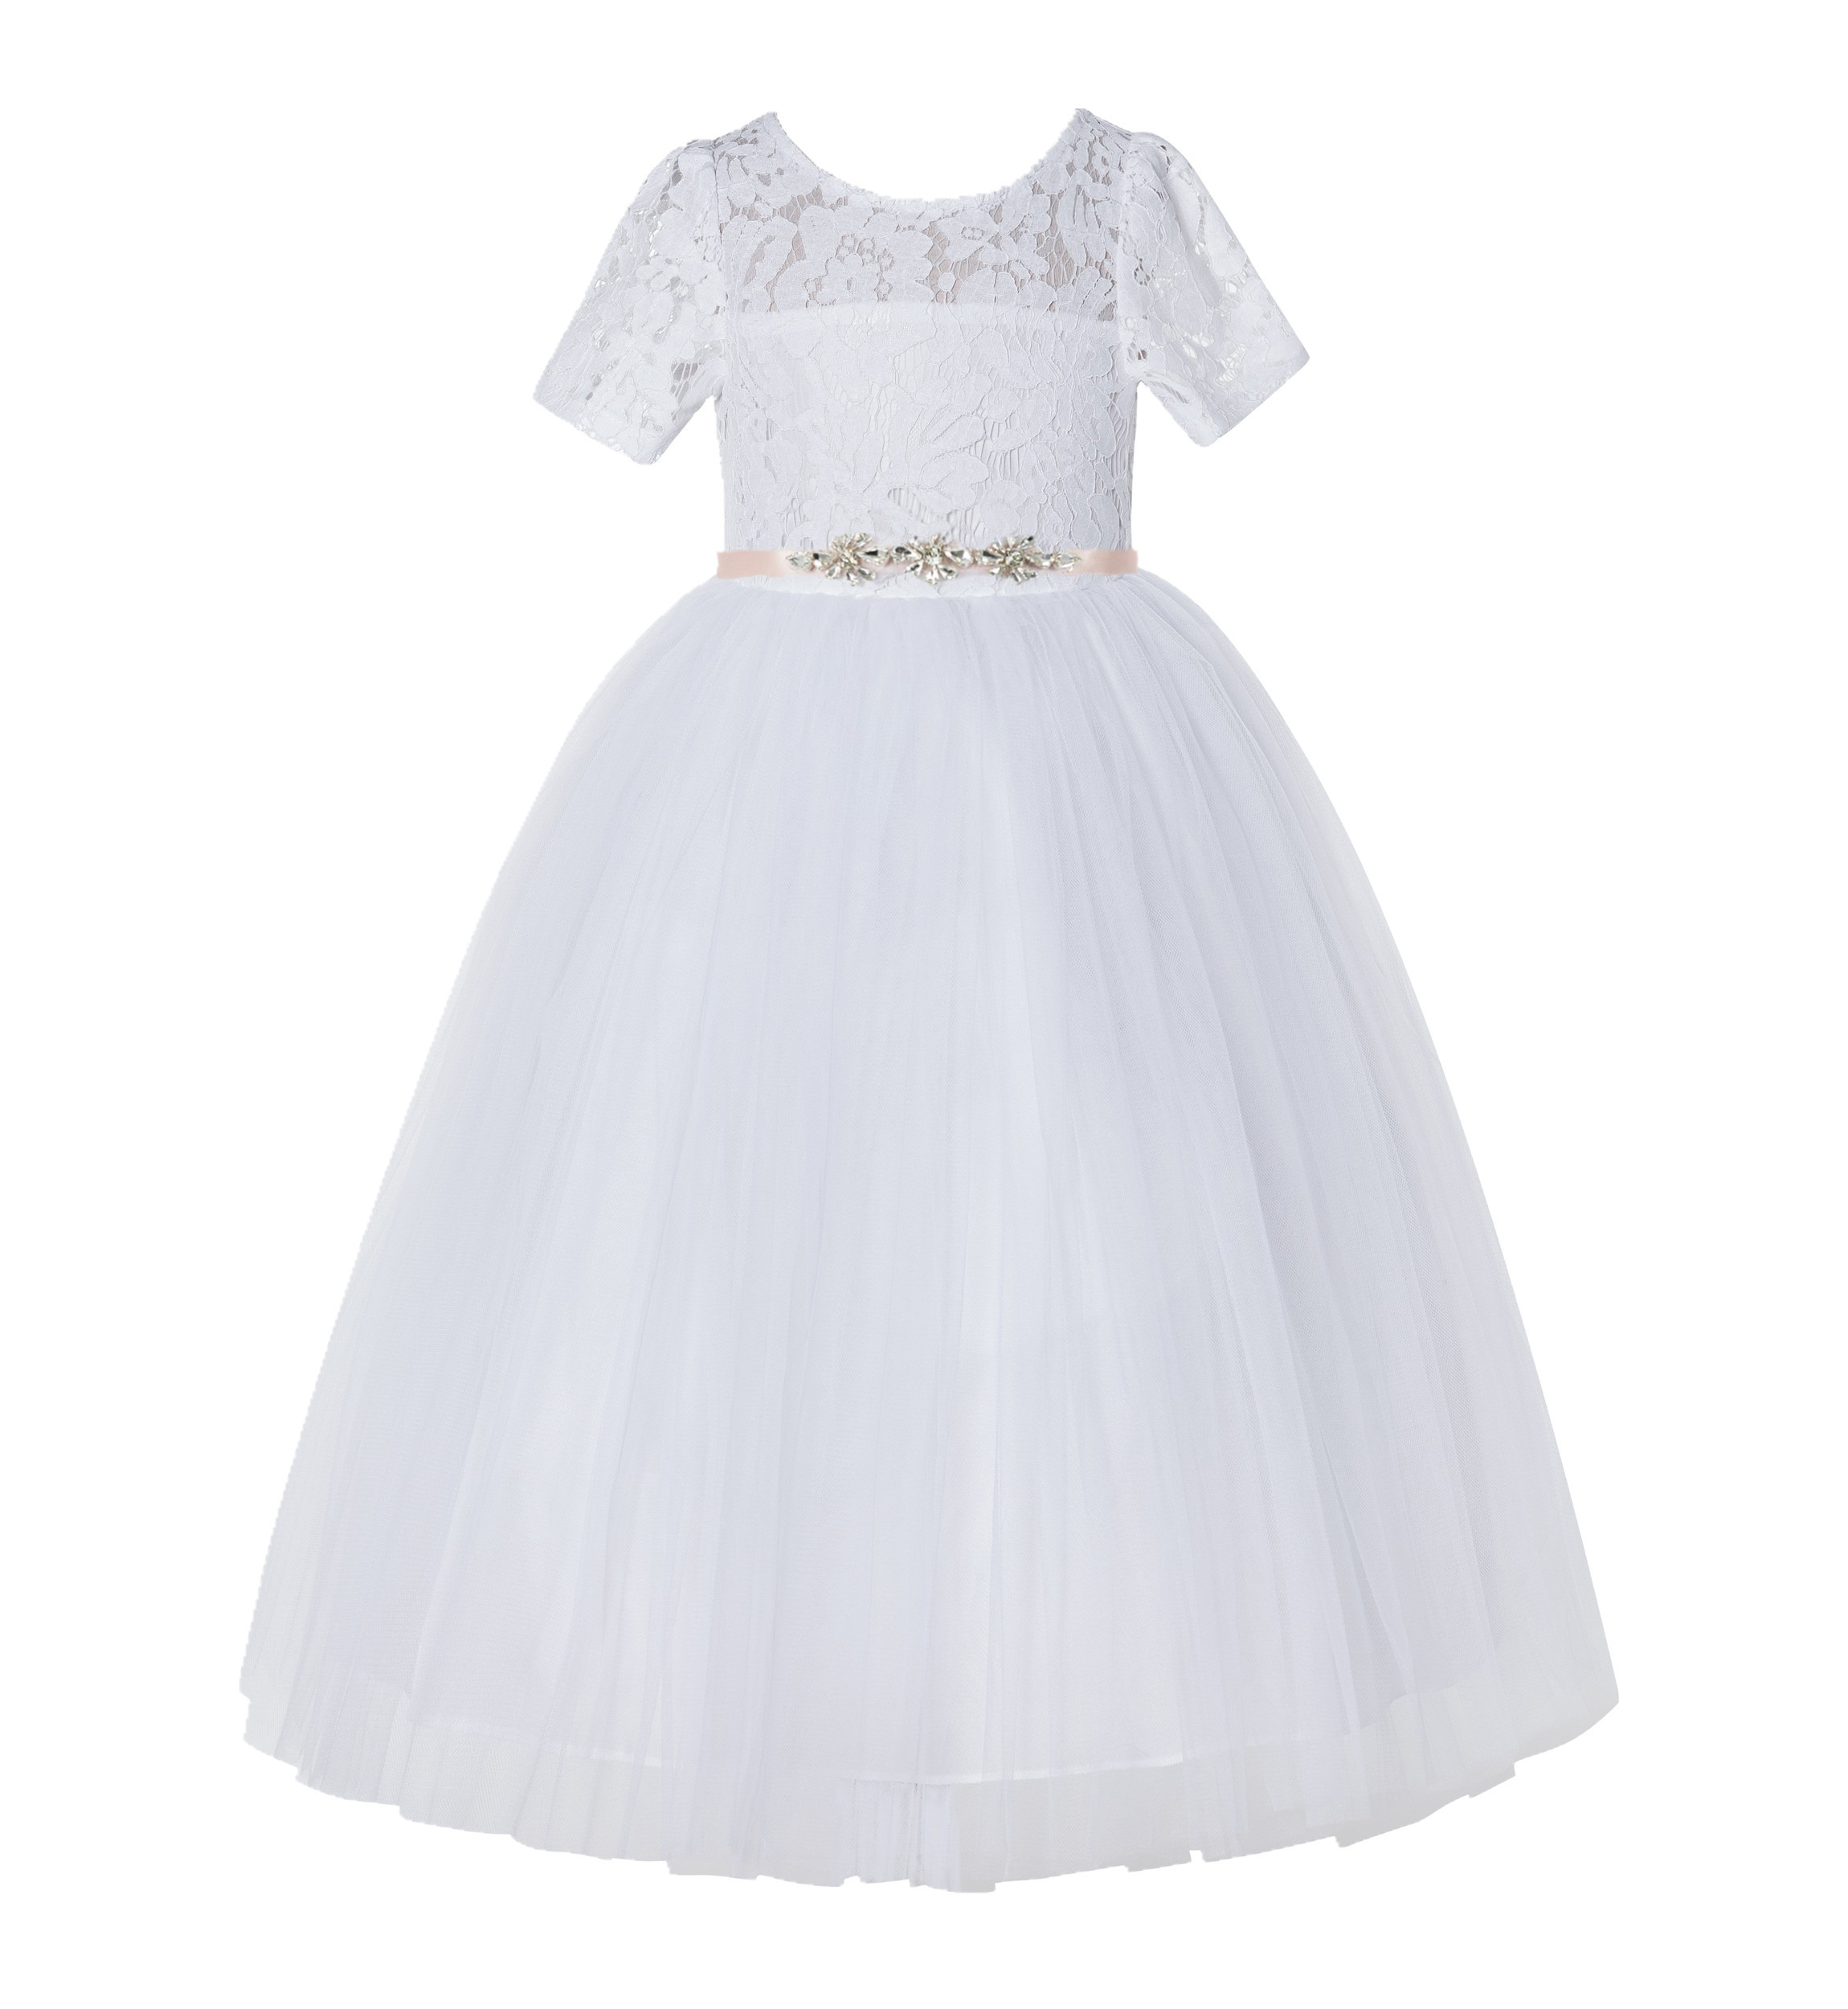 White Floral Lace Flower Girl Dress Baptism Dress LG2